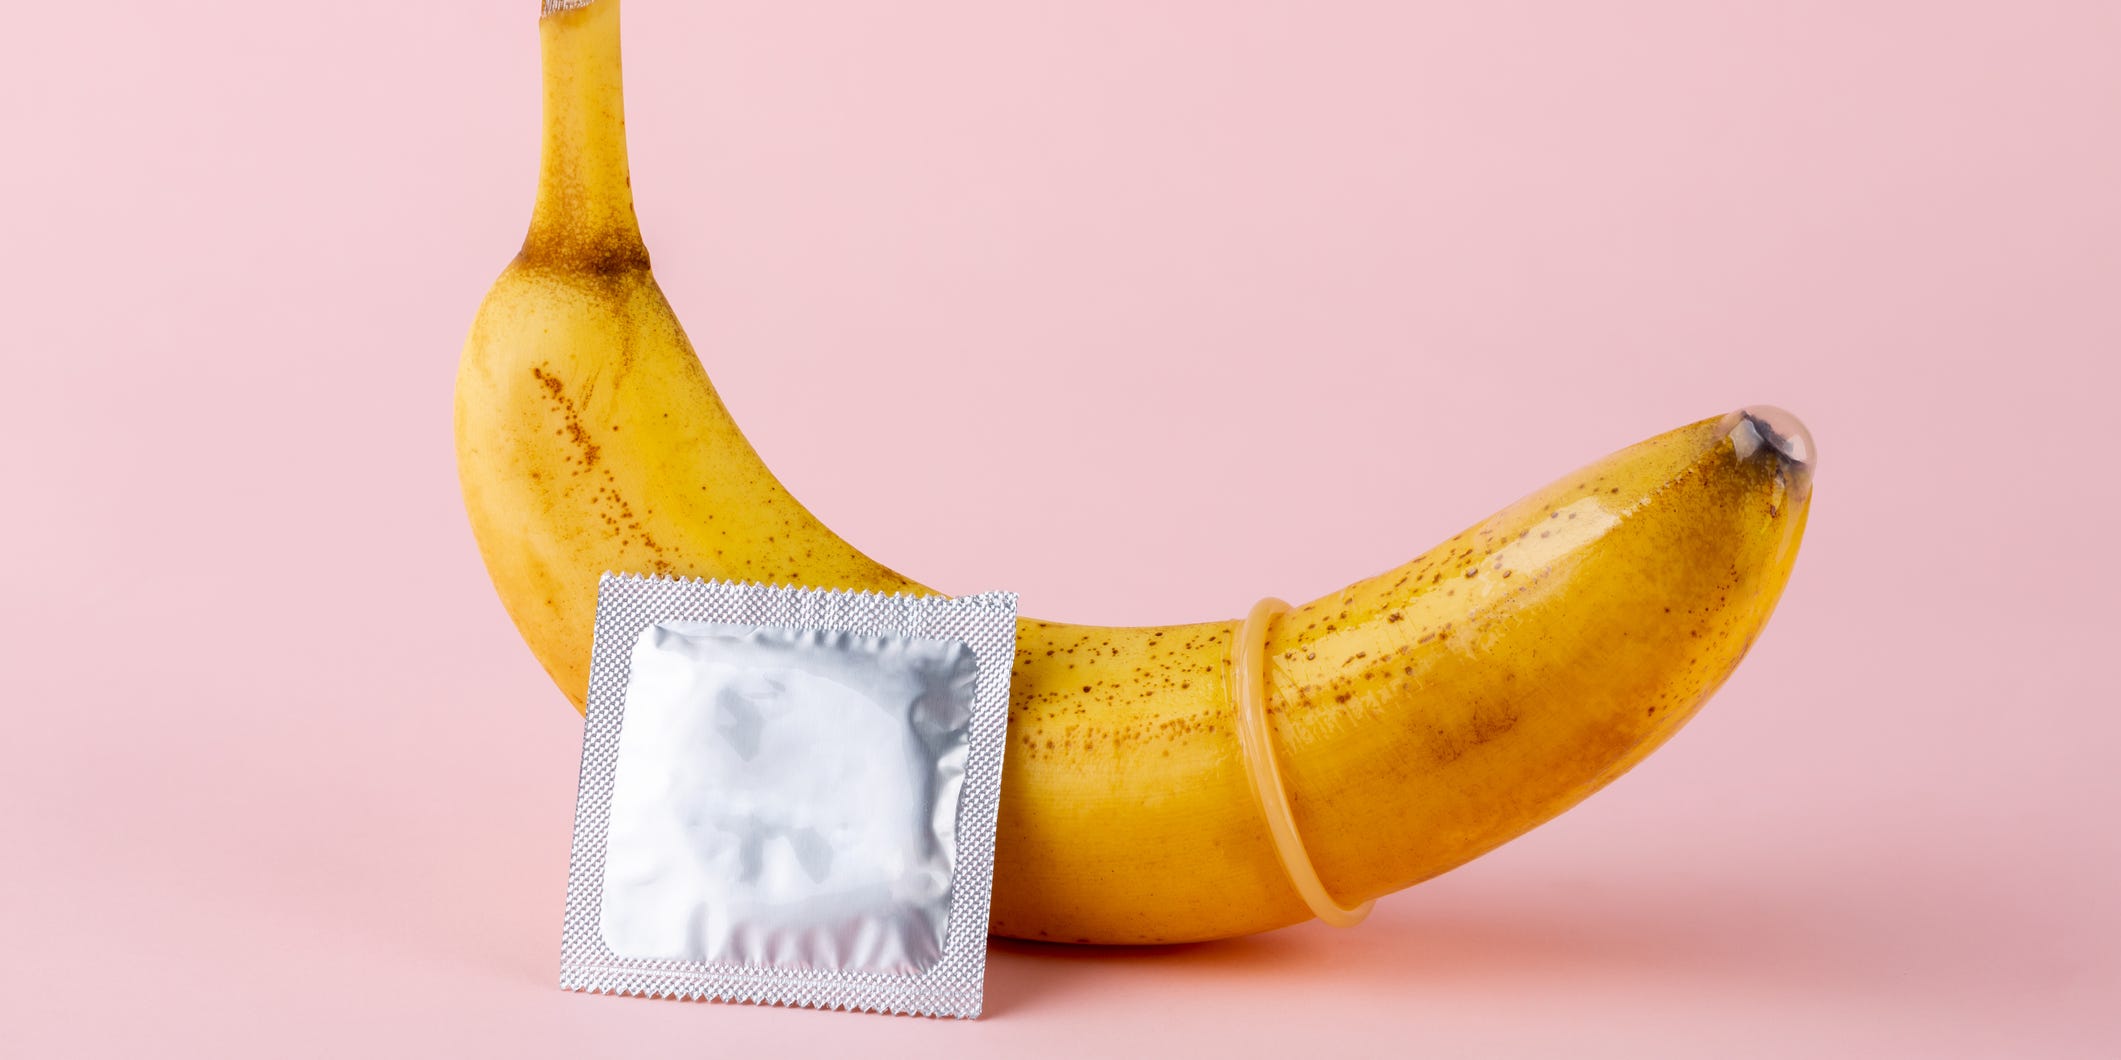 condom on a banana